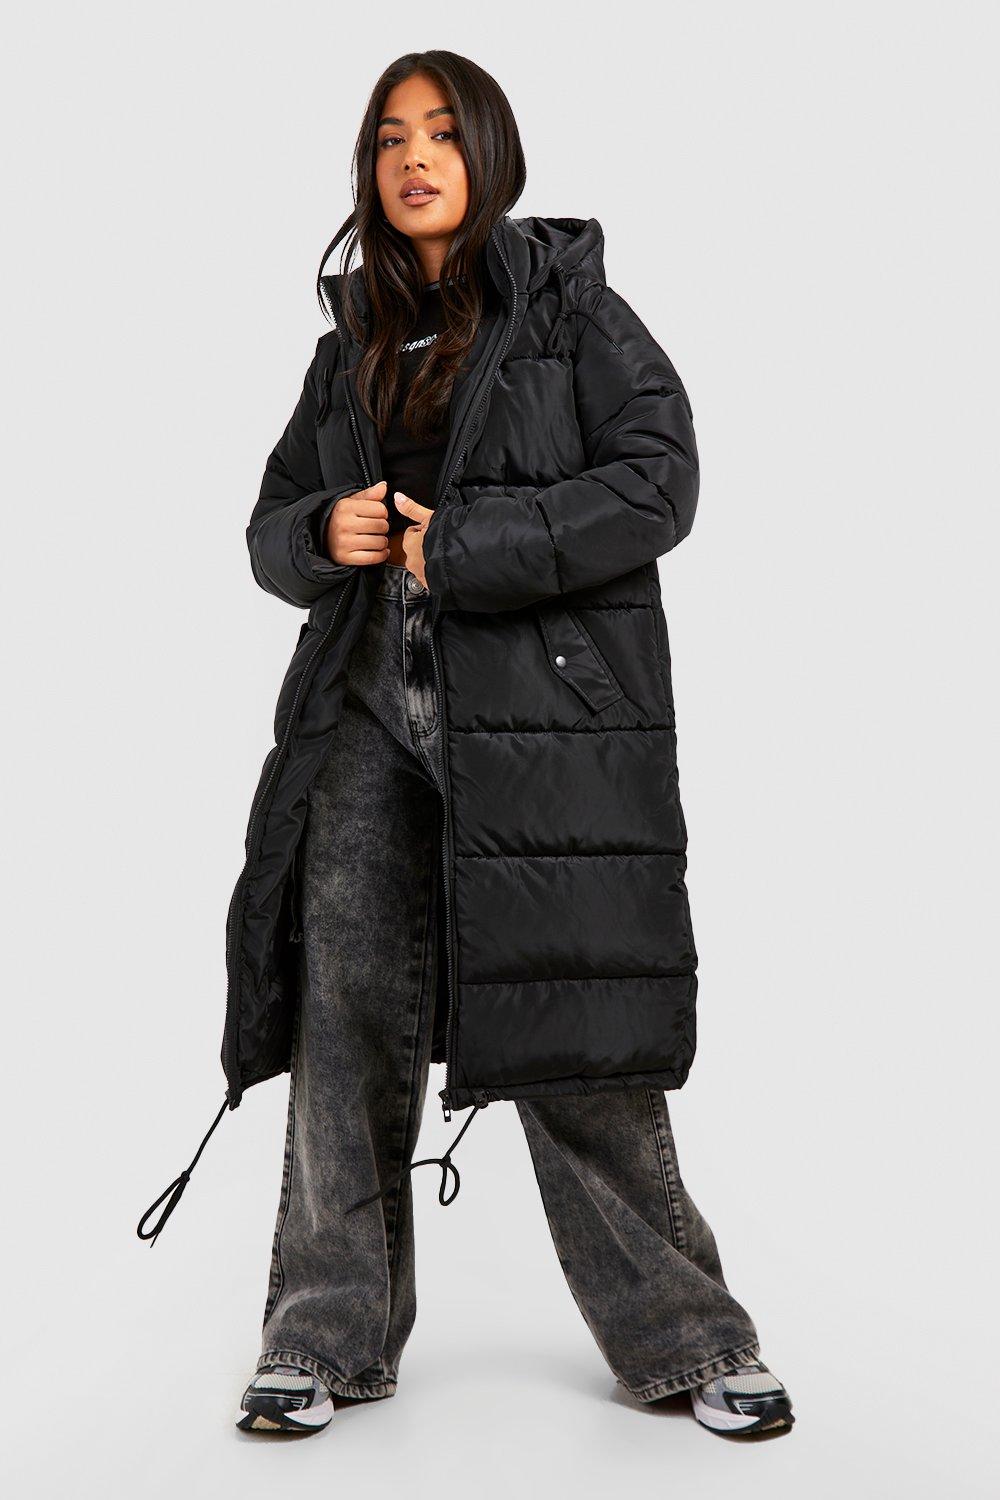 Winter coat, Long wool coat, black coat dress, flare coat, buttoned ja –  lijingshop